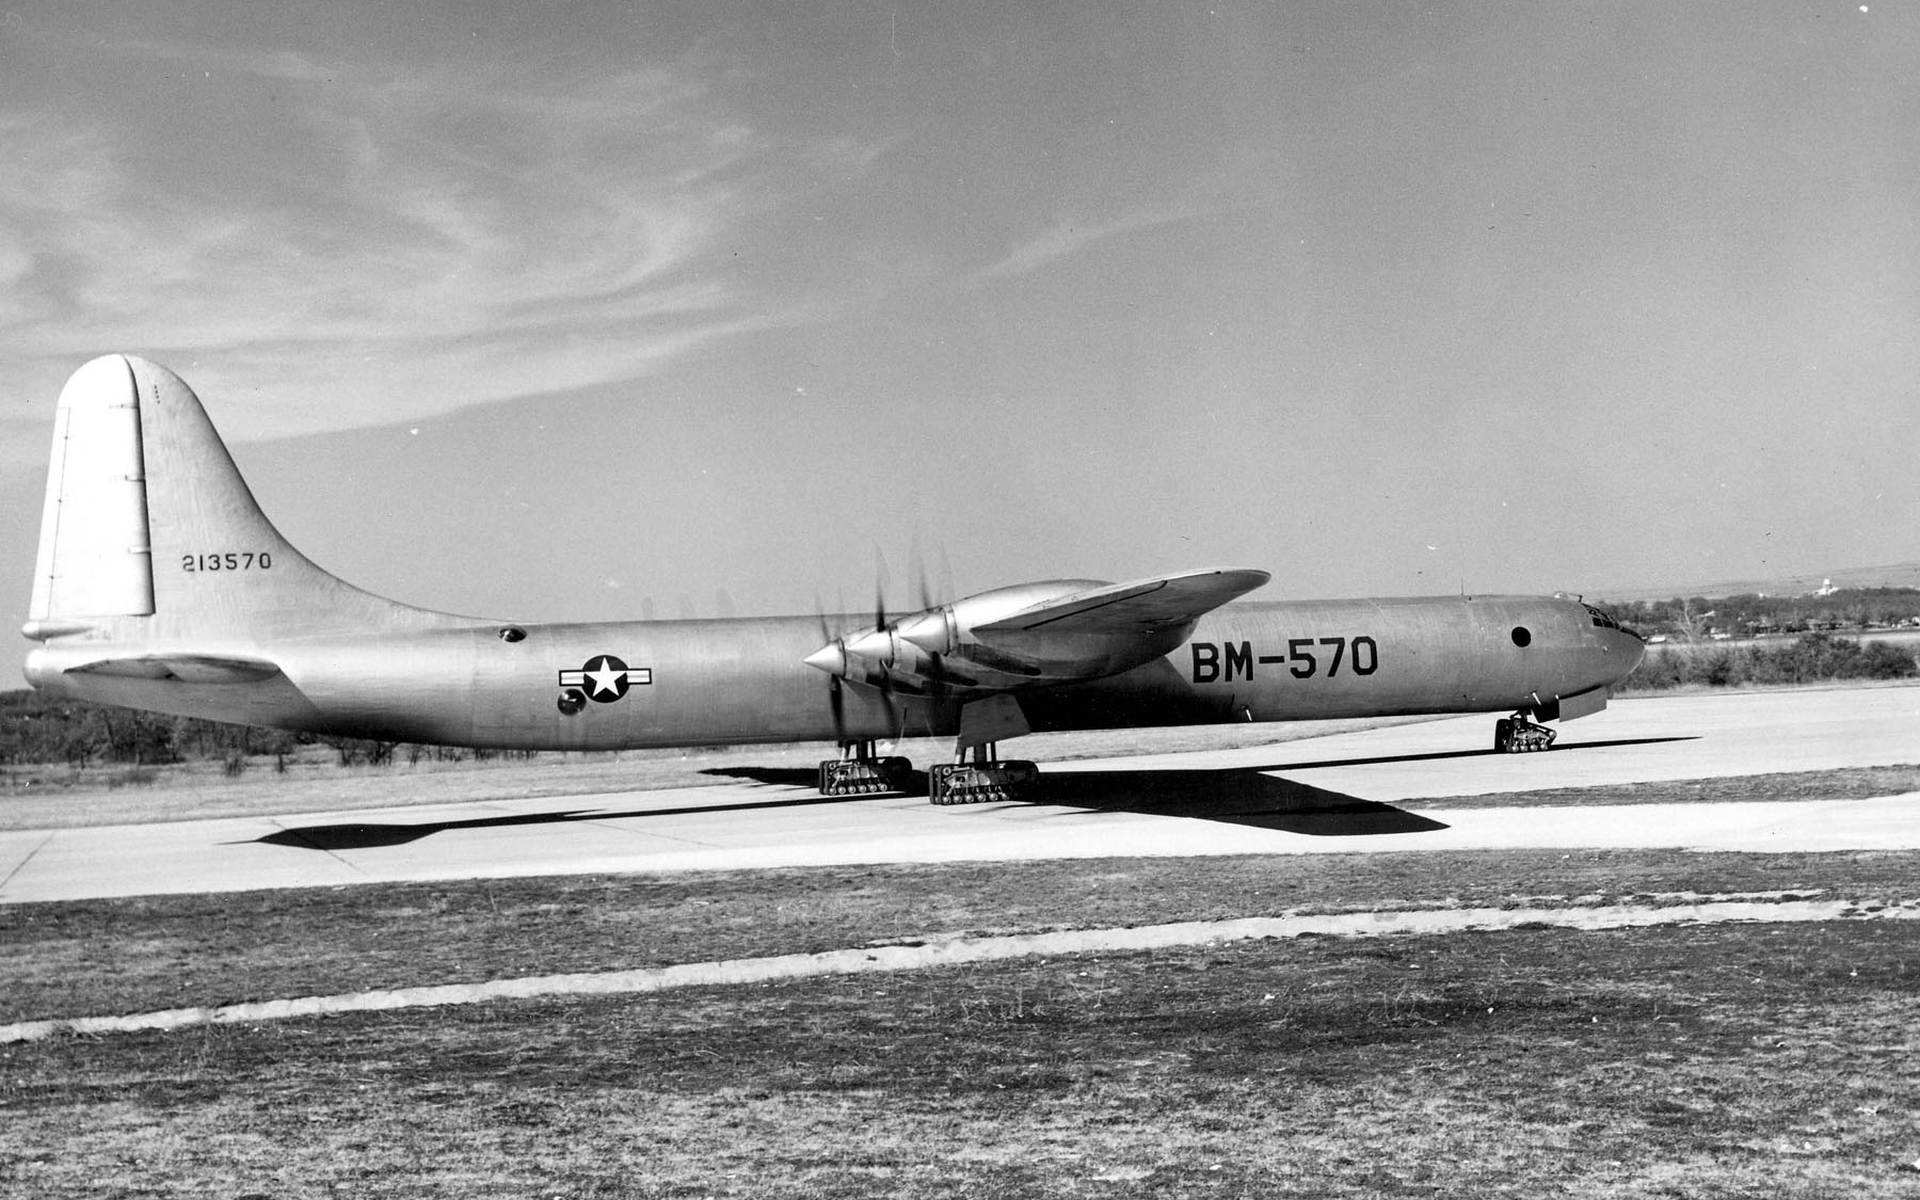 Military Convair B-36 HD Wallpaper | Background Image